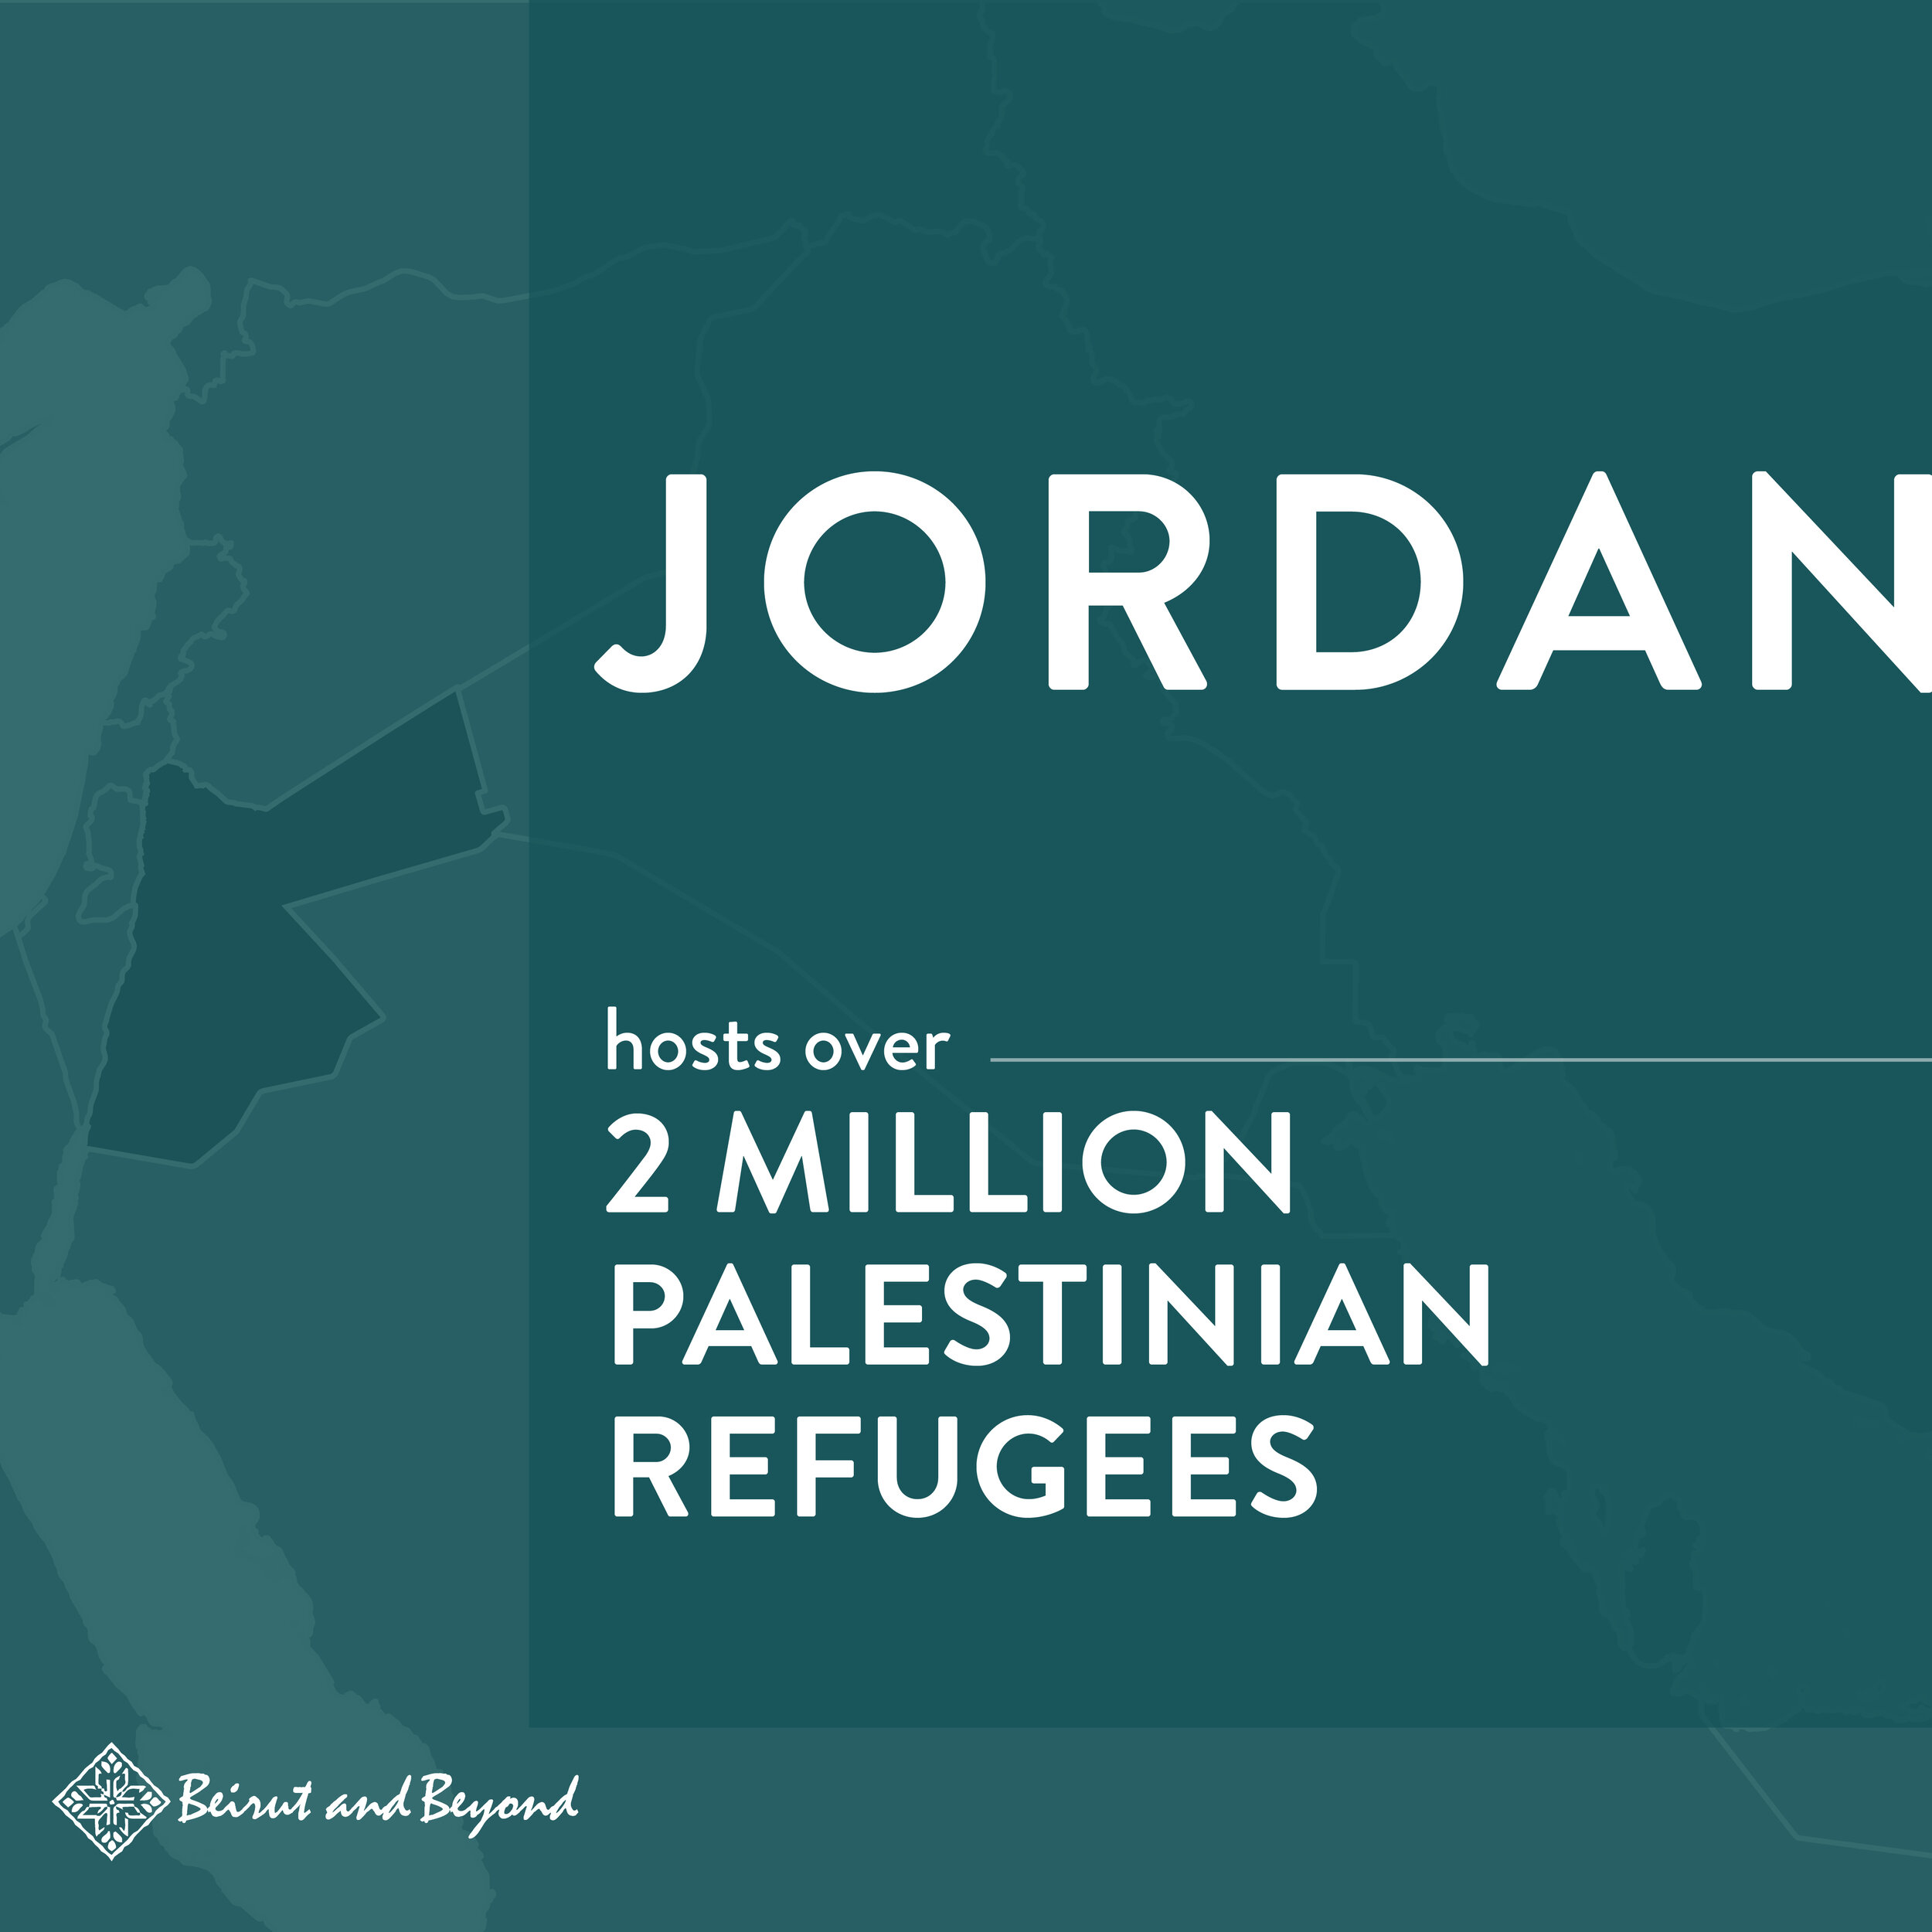 2020BB_Campaign_IG_Jordan-FINAL-01.jpg